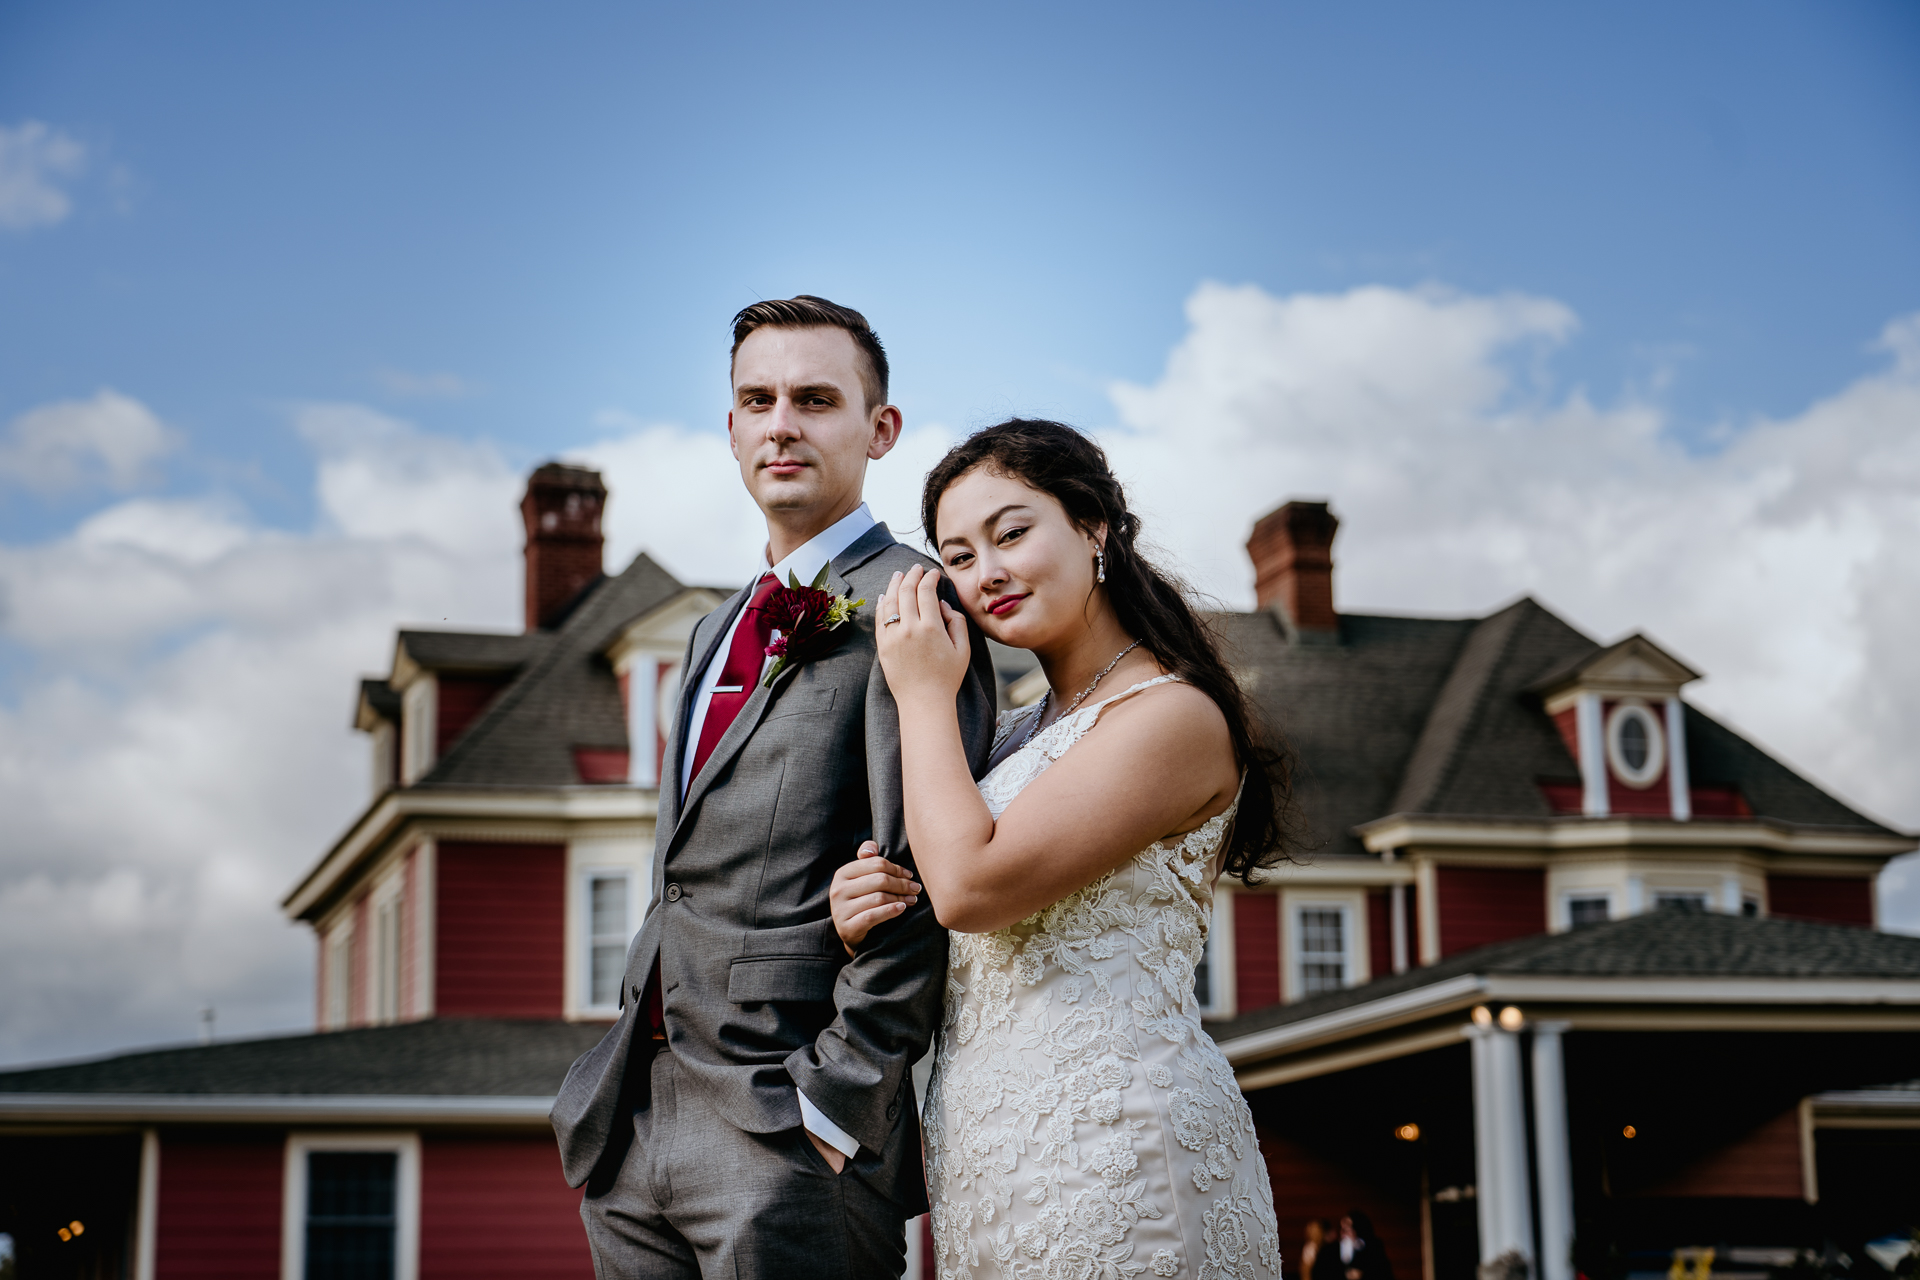 Mountain View Manor wedding photographers